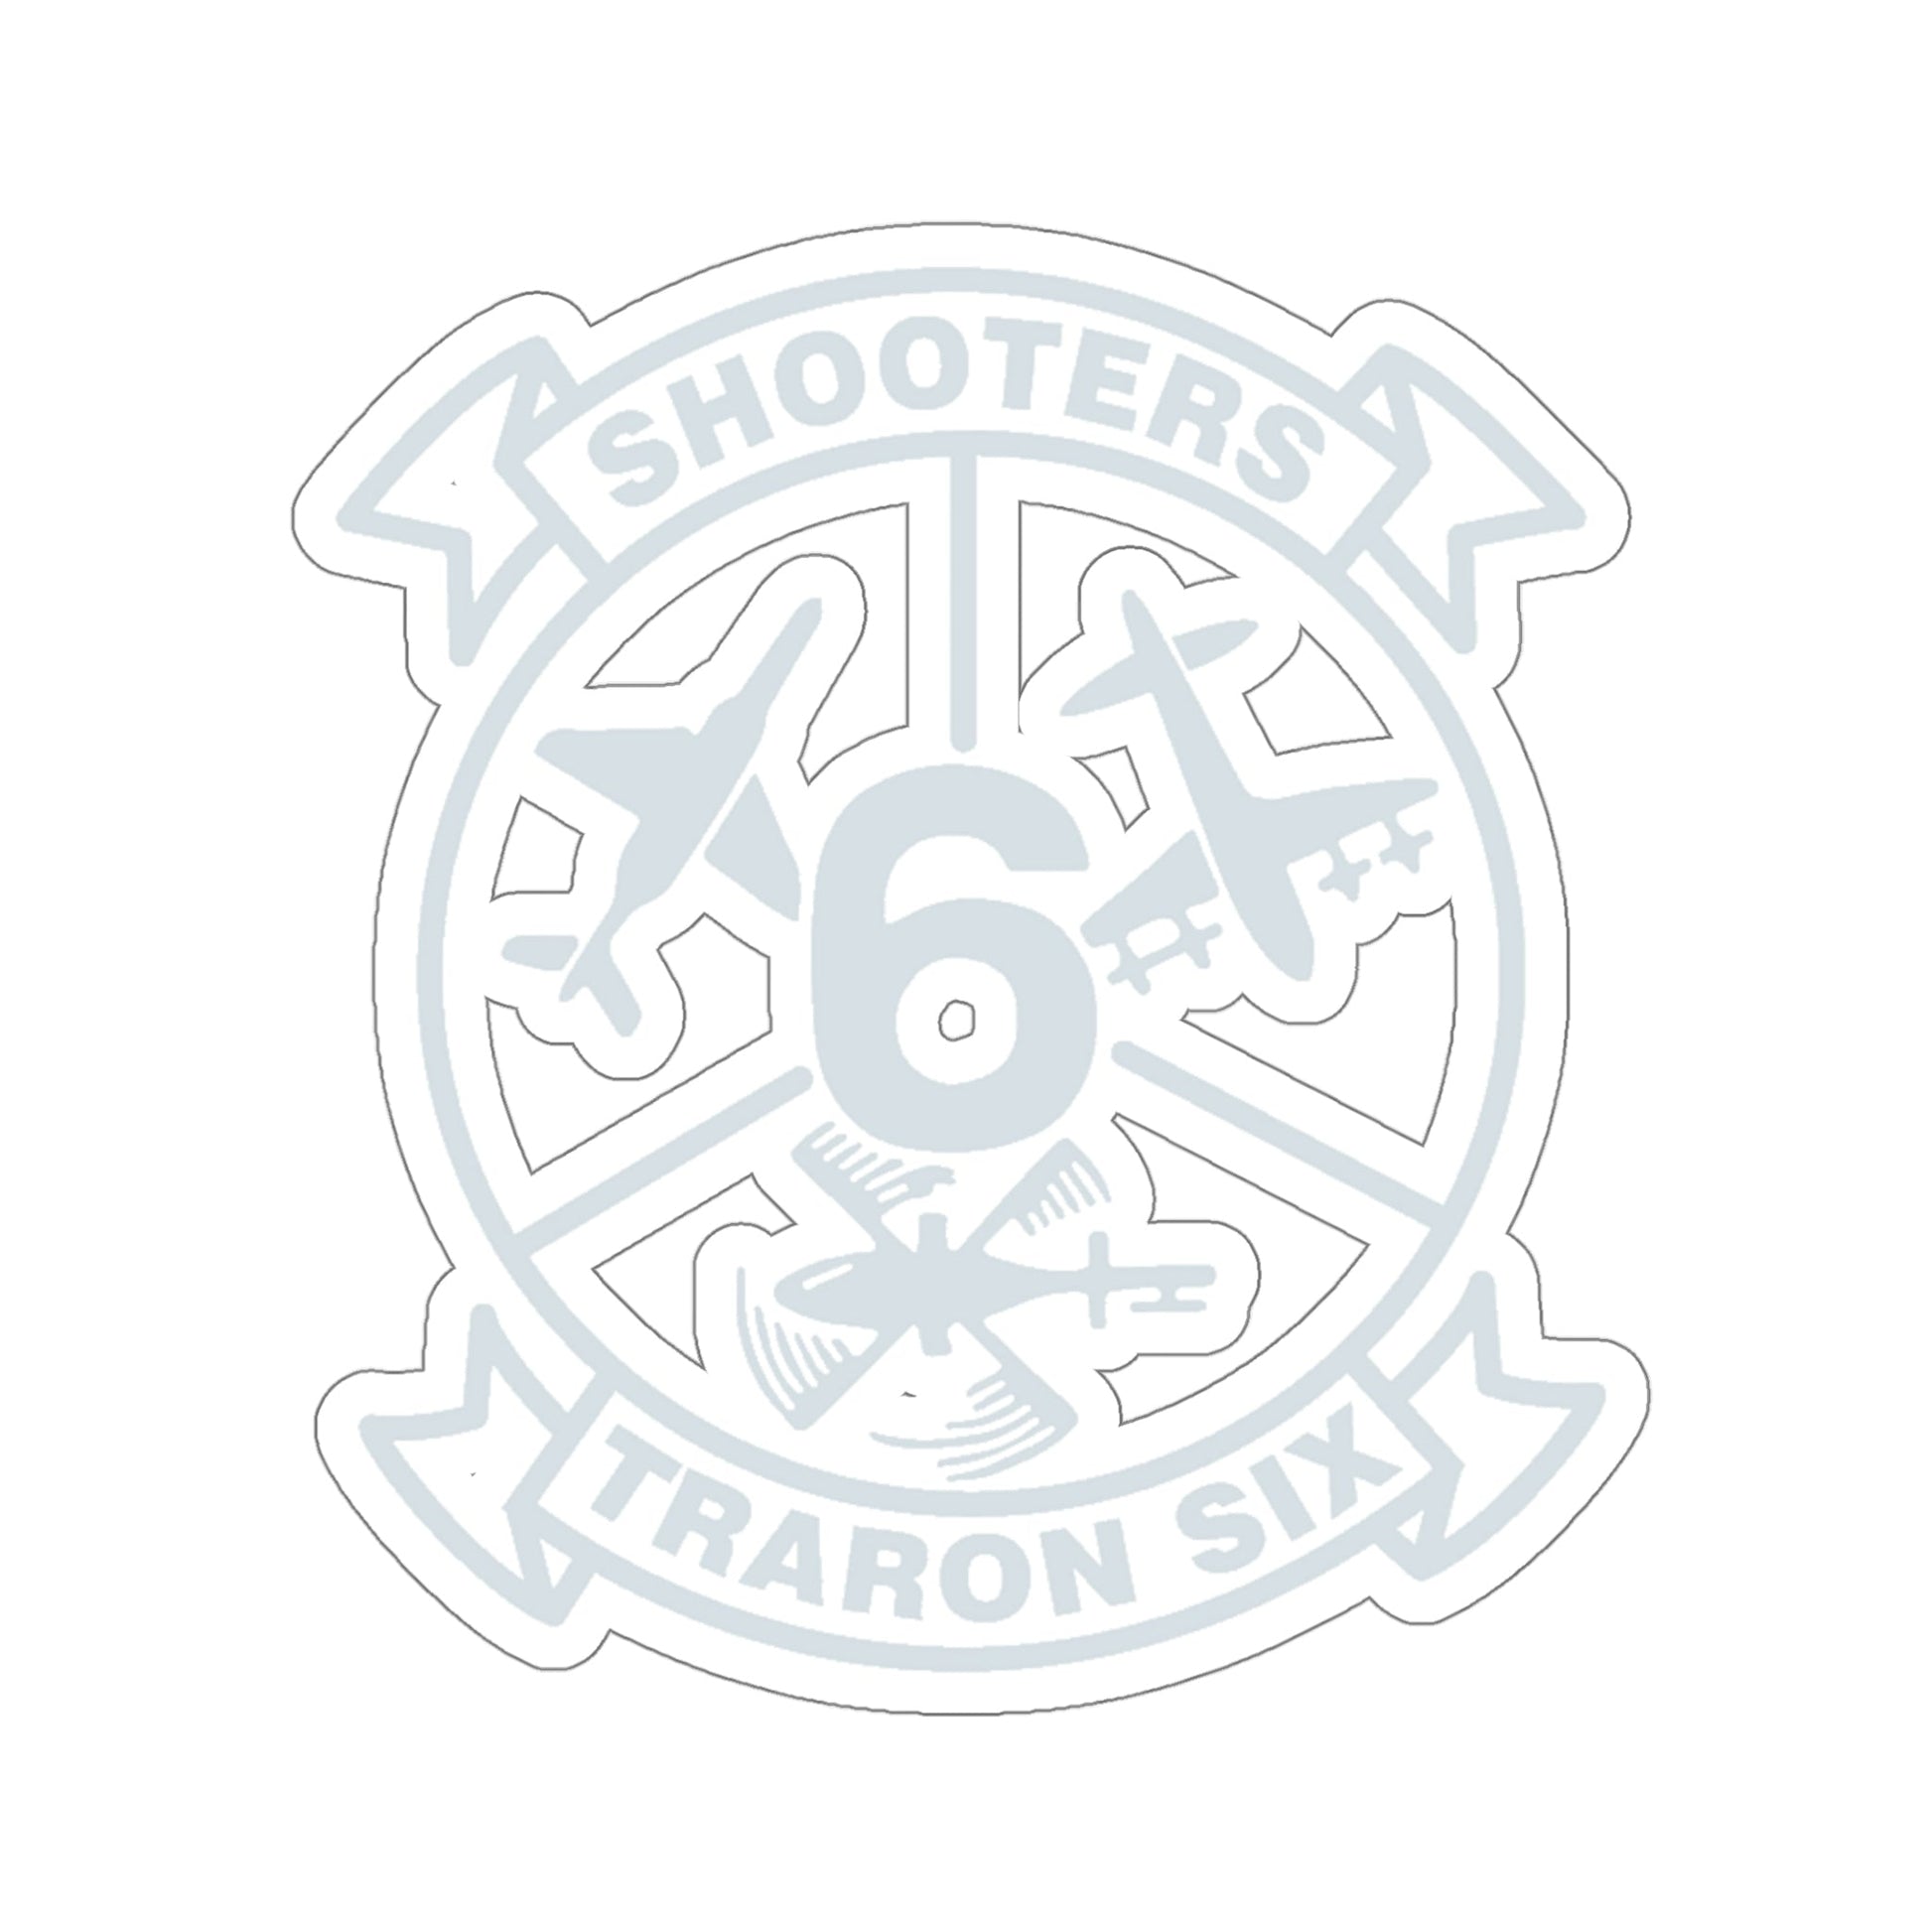 VT 6 TRARON VT6 Shooters (U.S. Navy) STICKER Vinyl Die-Cut Decal-5 Inch-The Sticker Space